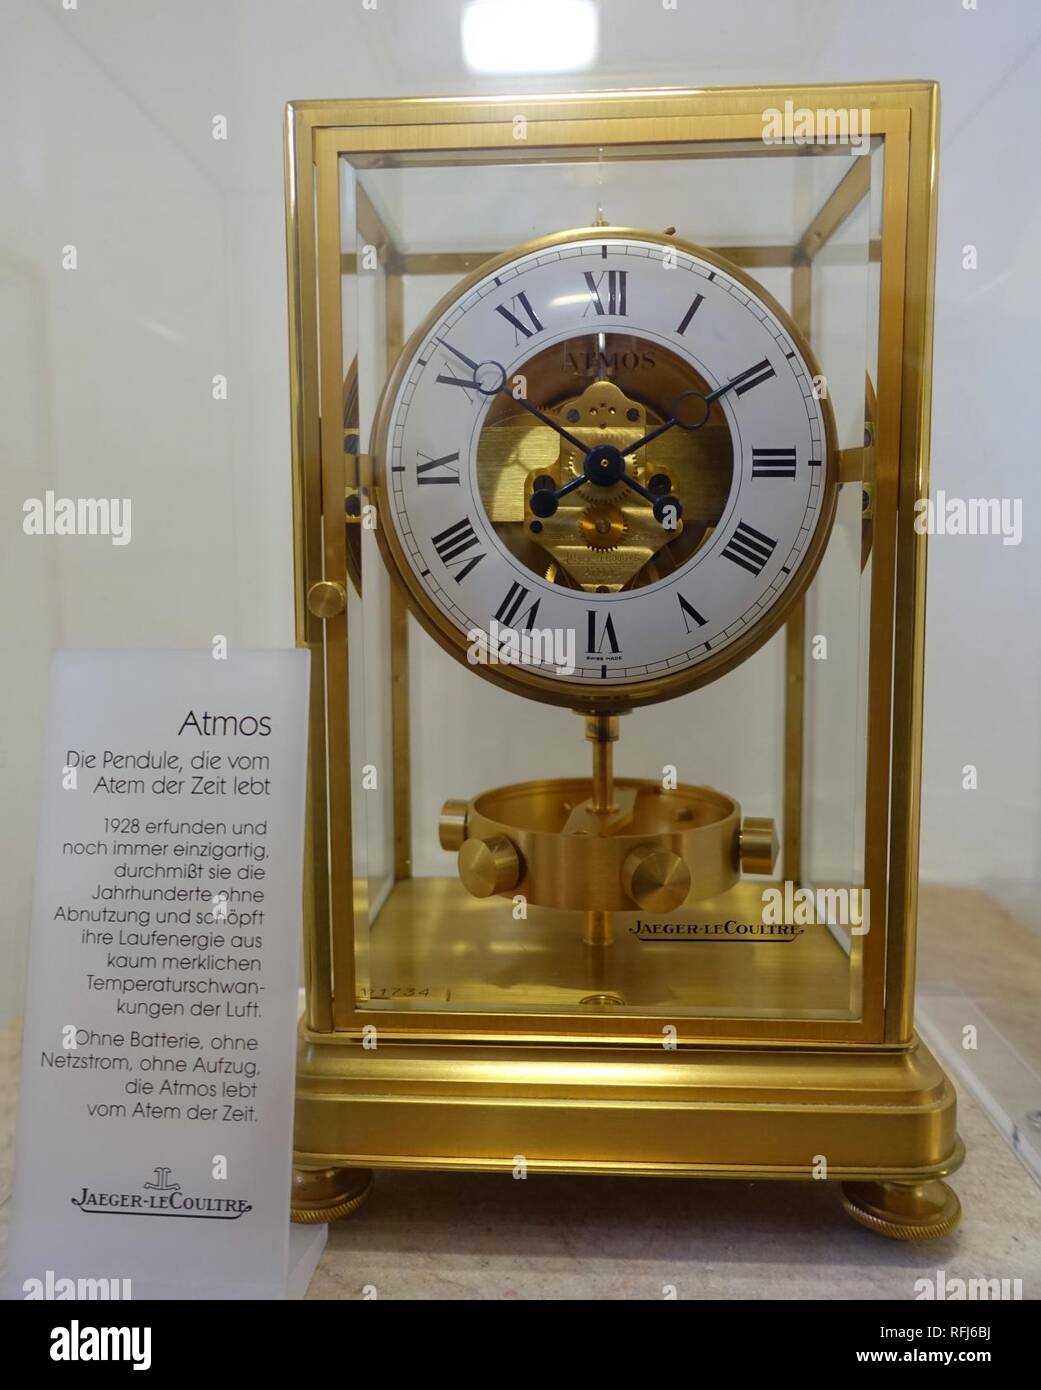 Atmos-Uhr Prototyp, Jaeger-LeCoultre - Karl Gebhardt Uhren Kollektion - Gewerbemuseum - Nürnberg, Deutschland - Stockfoto